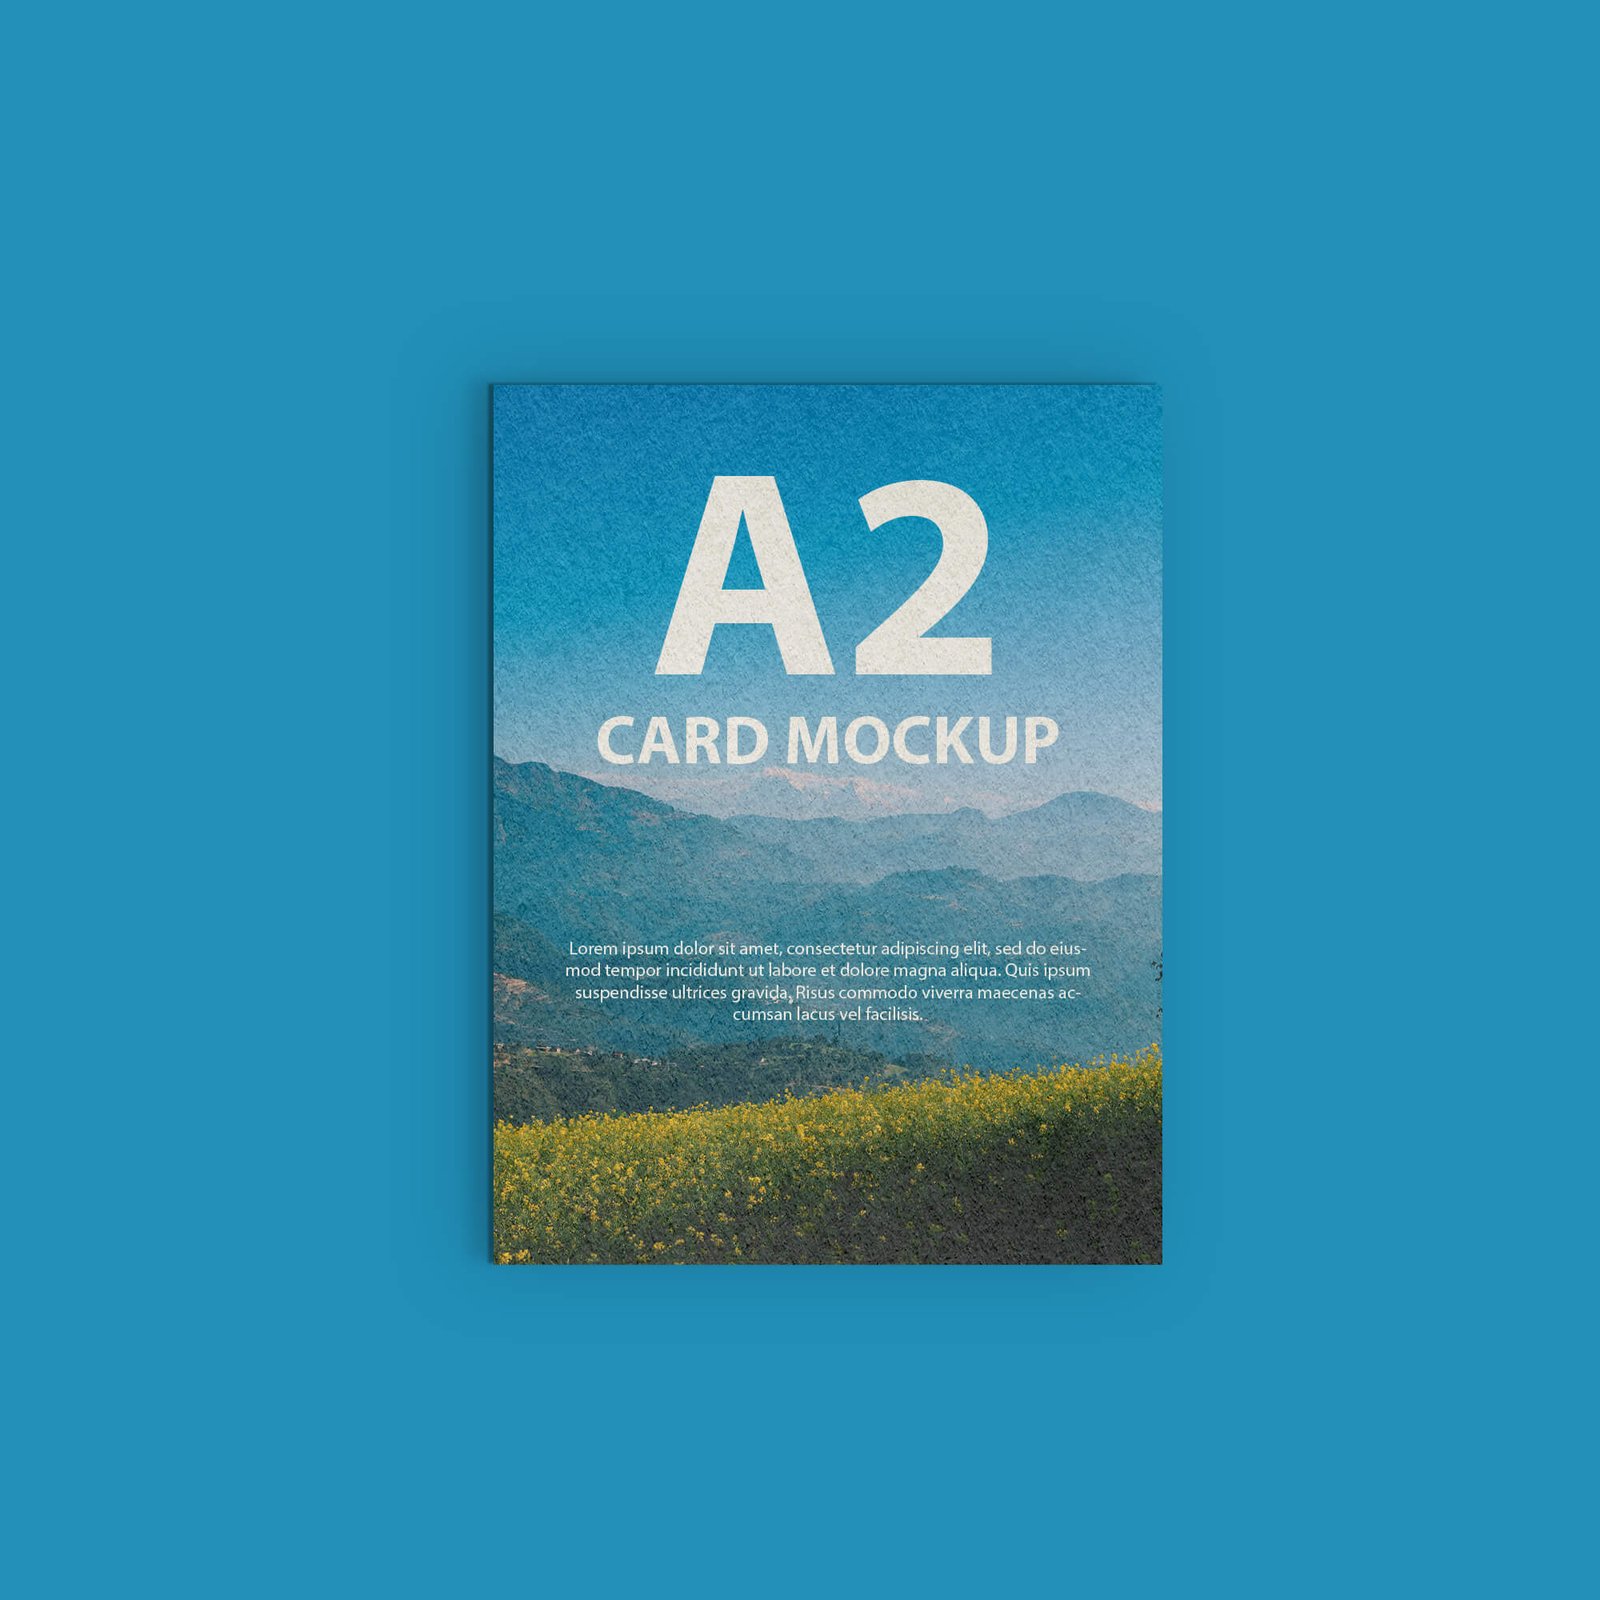 Design Free A2 Card Mockup Template